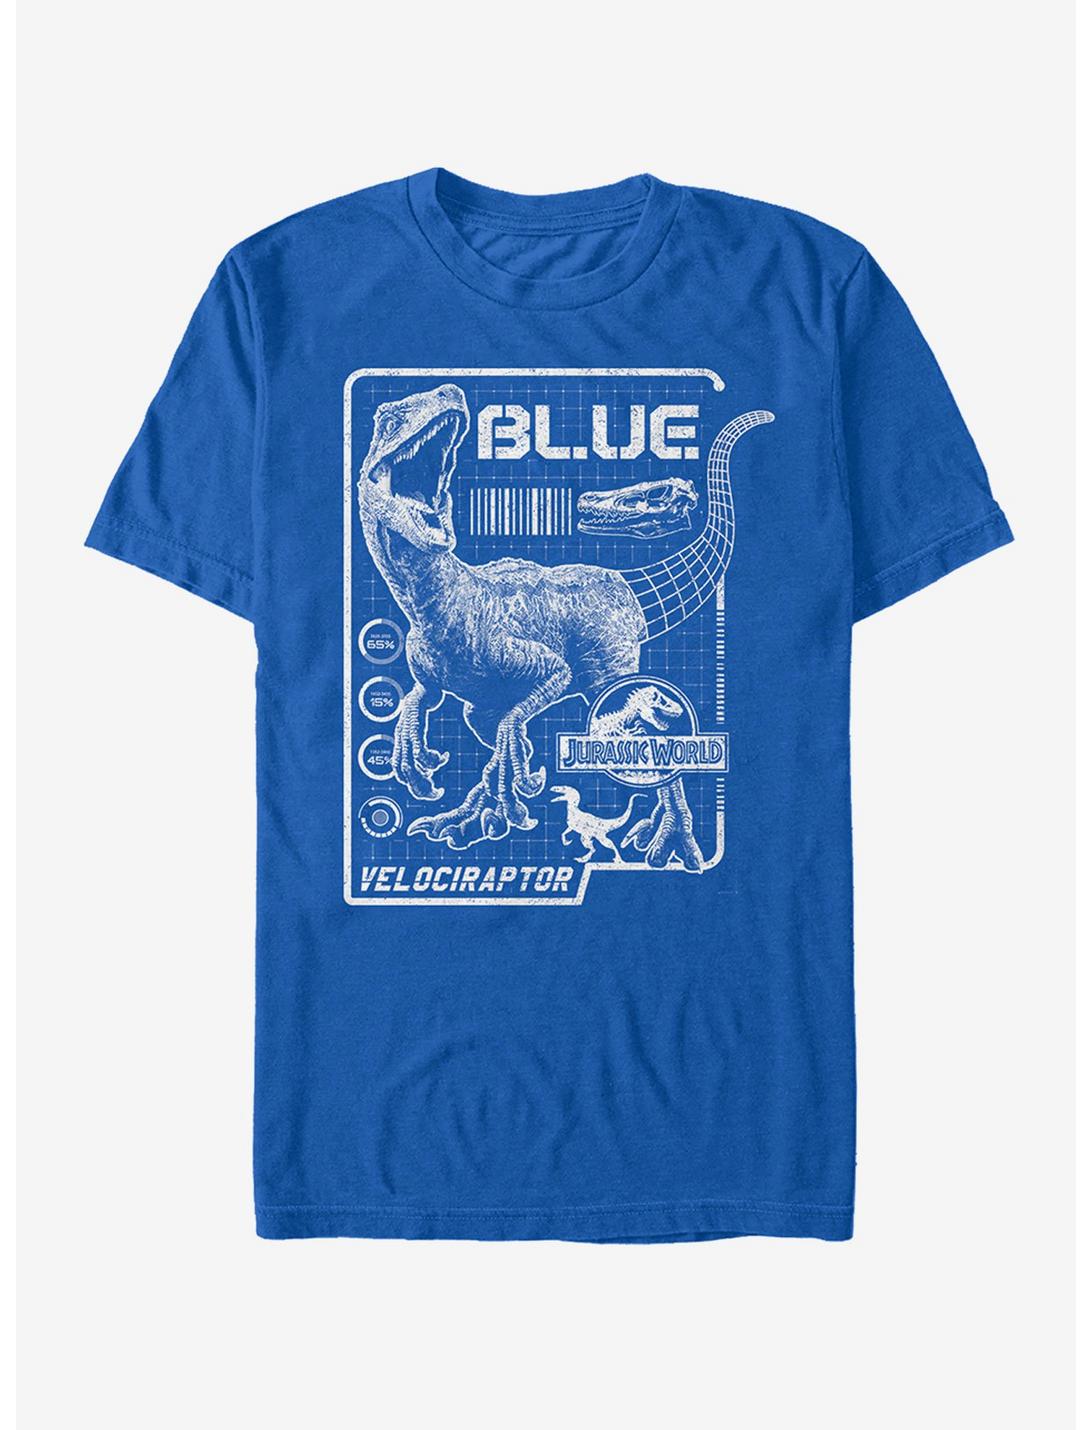 Jurassic World Blue Details T-Shirt, ROYAL, hi-res